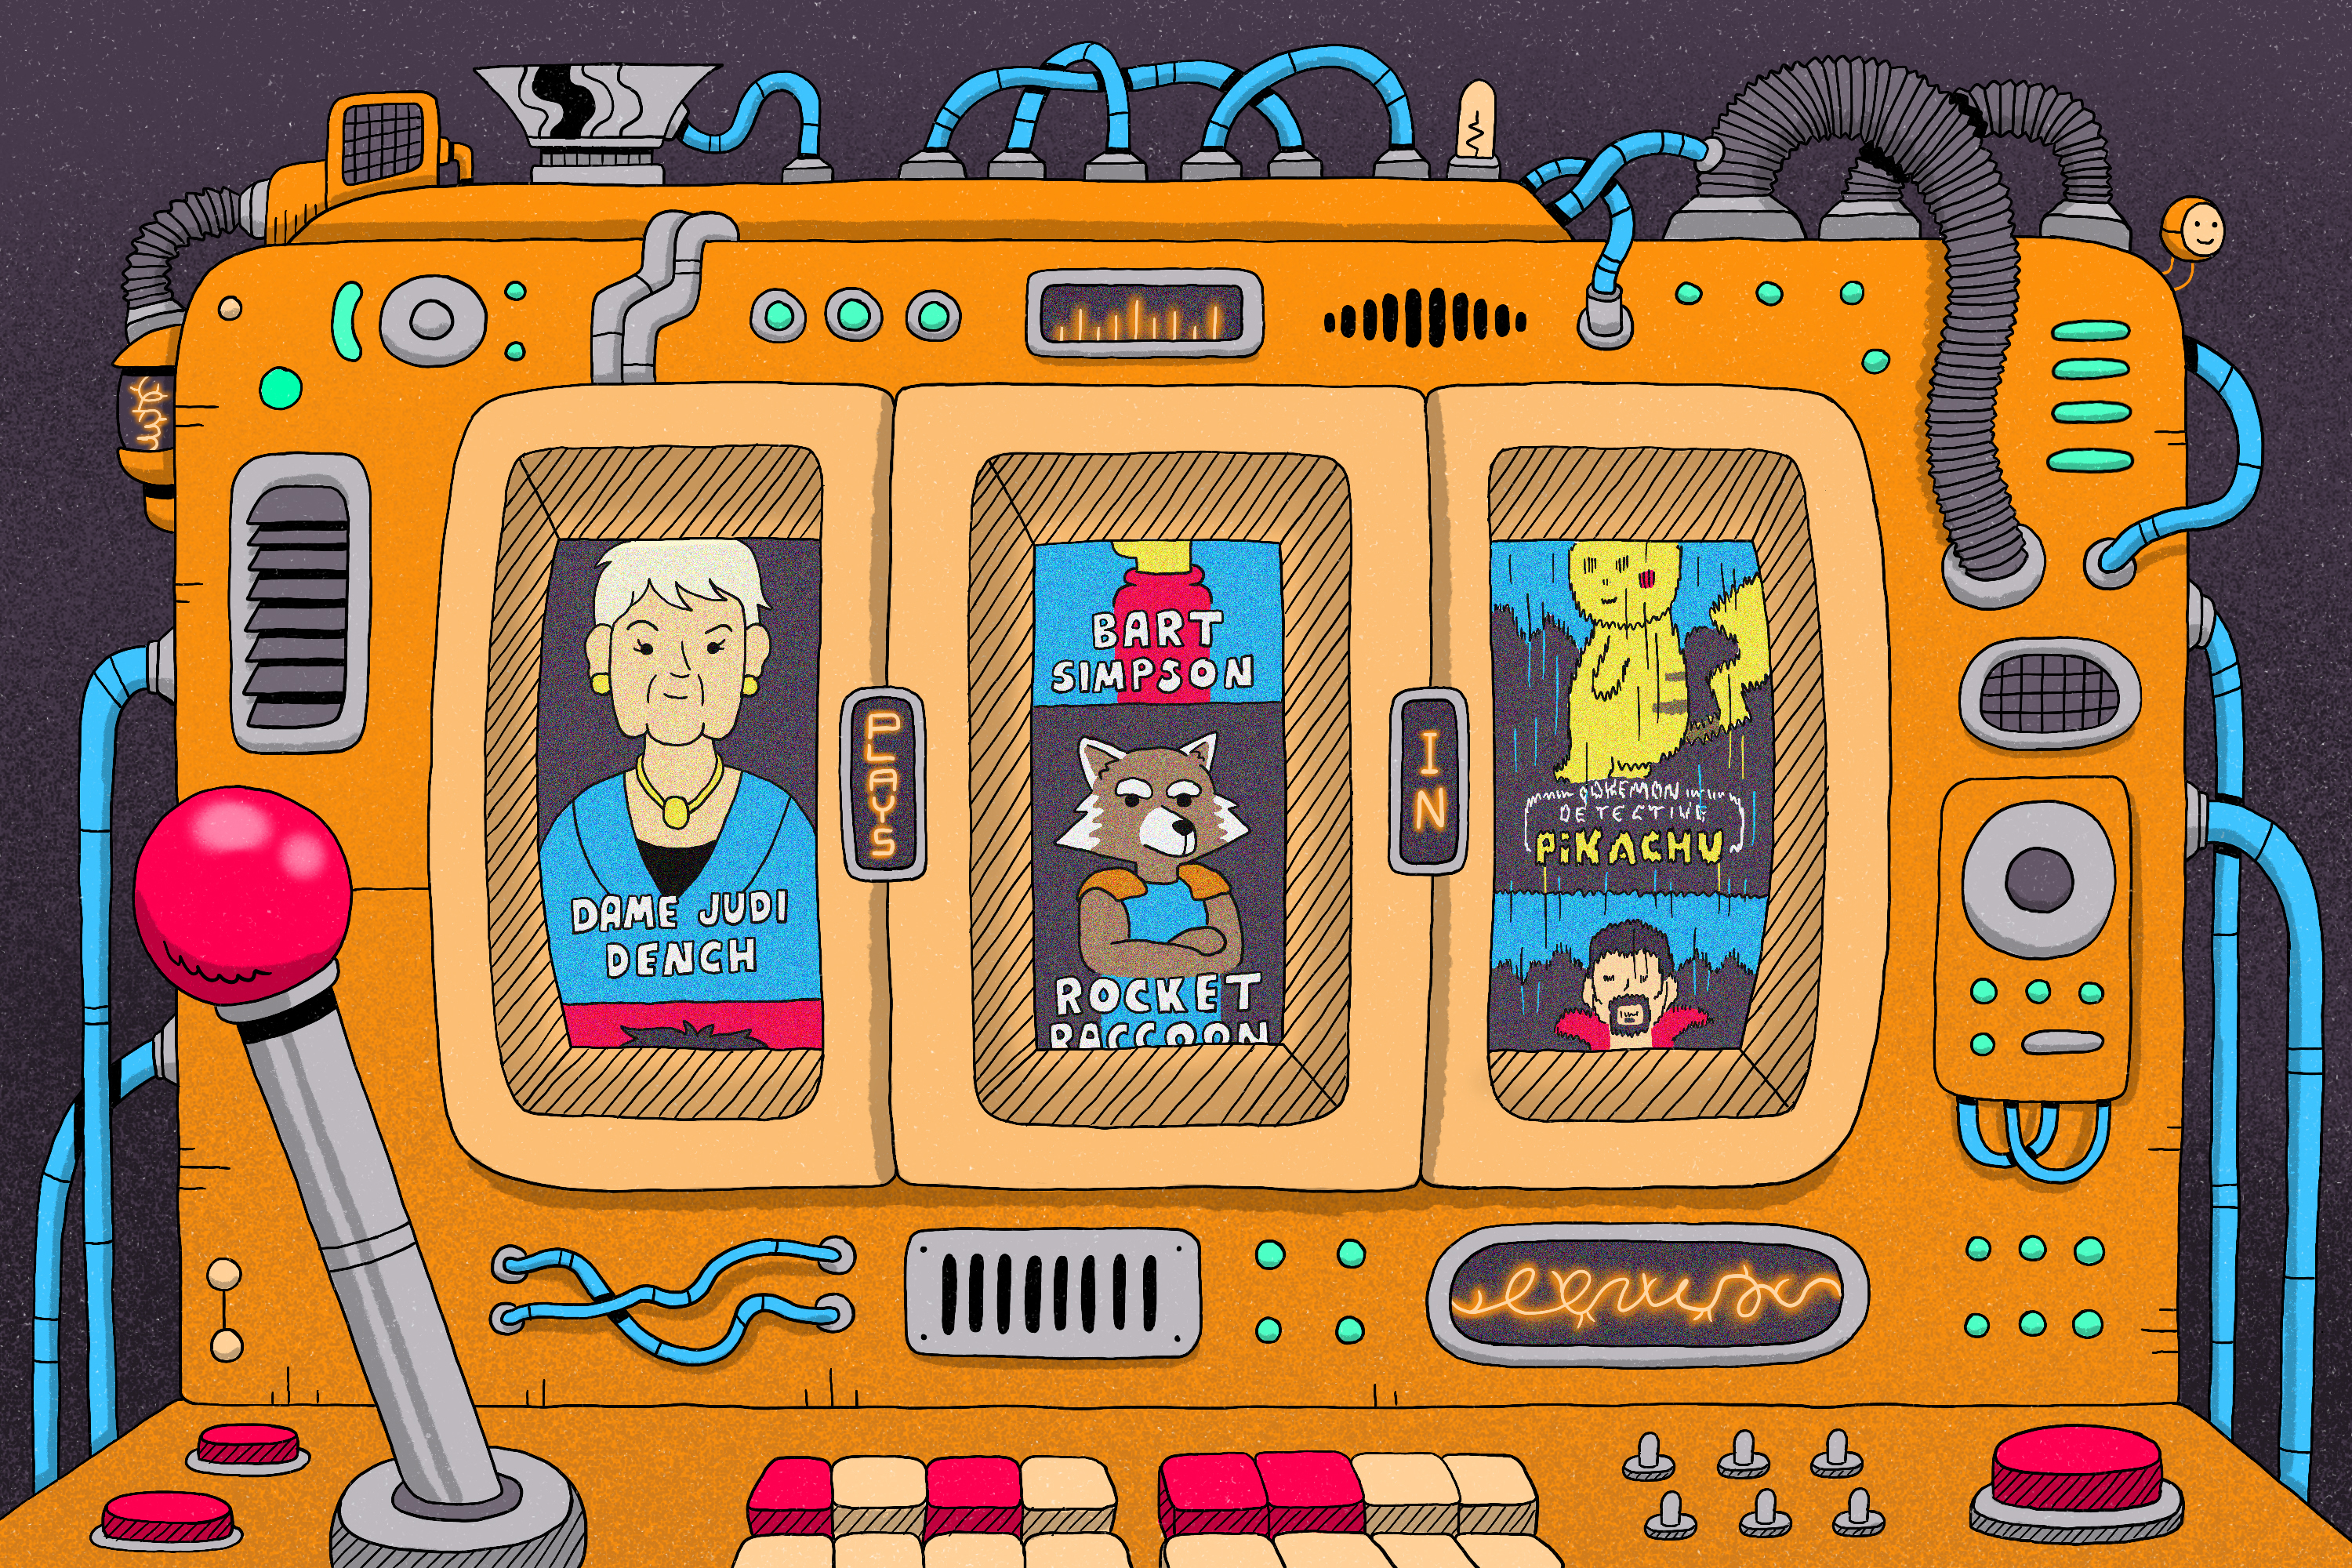 Comic style illustration of retro tech character generator machine